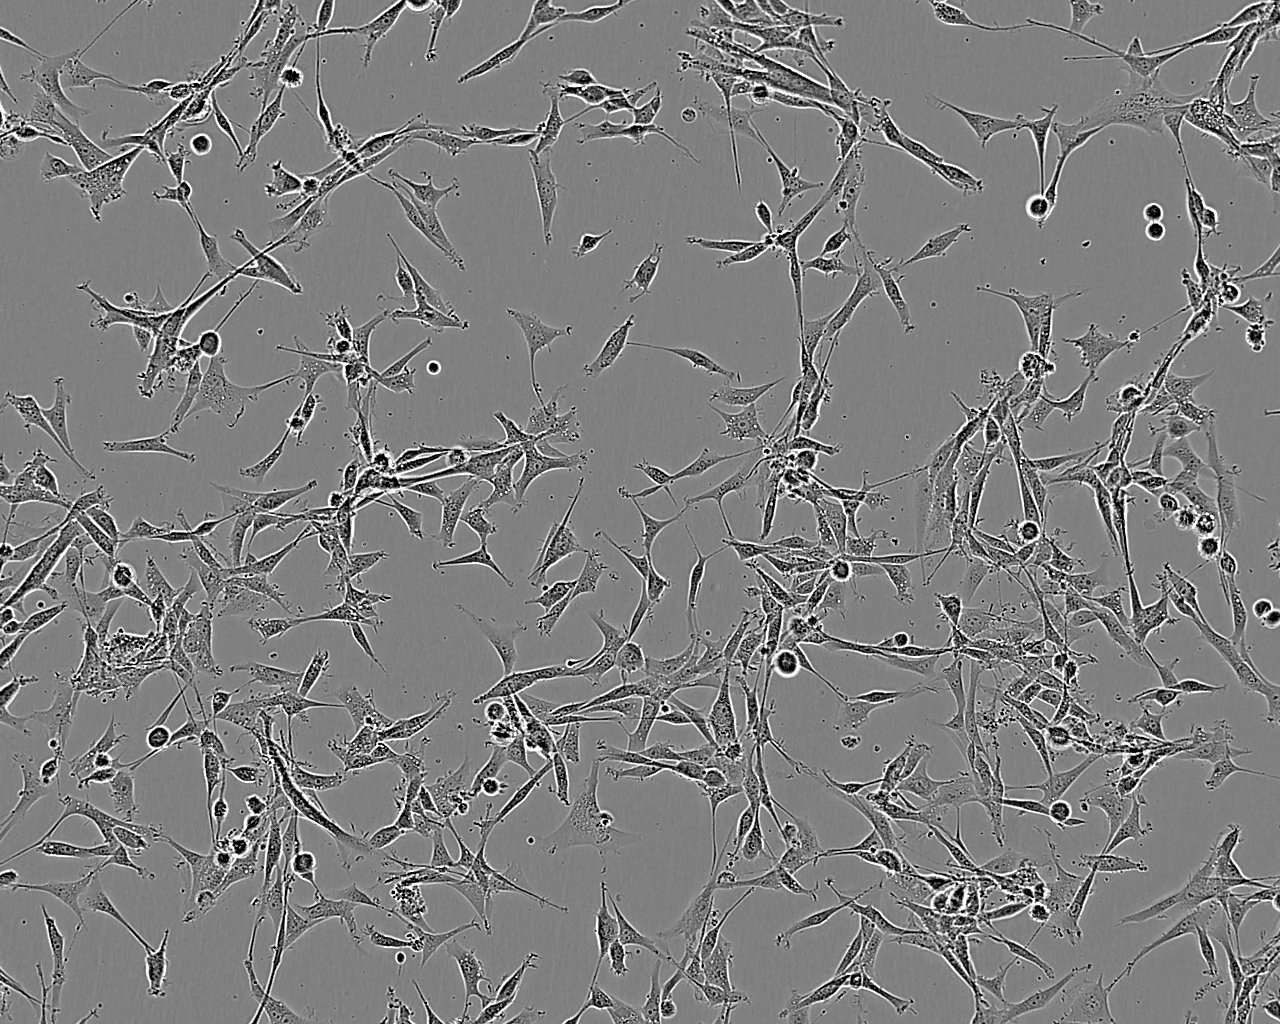 Becker epithelioid cells人脑星形胶质细胞系,Becker epithelioid cells